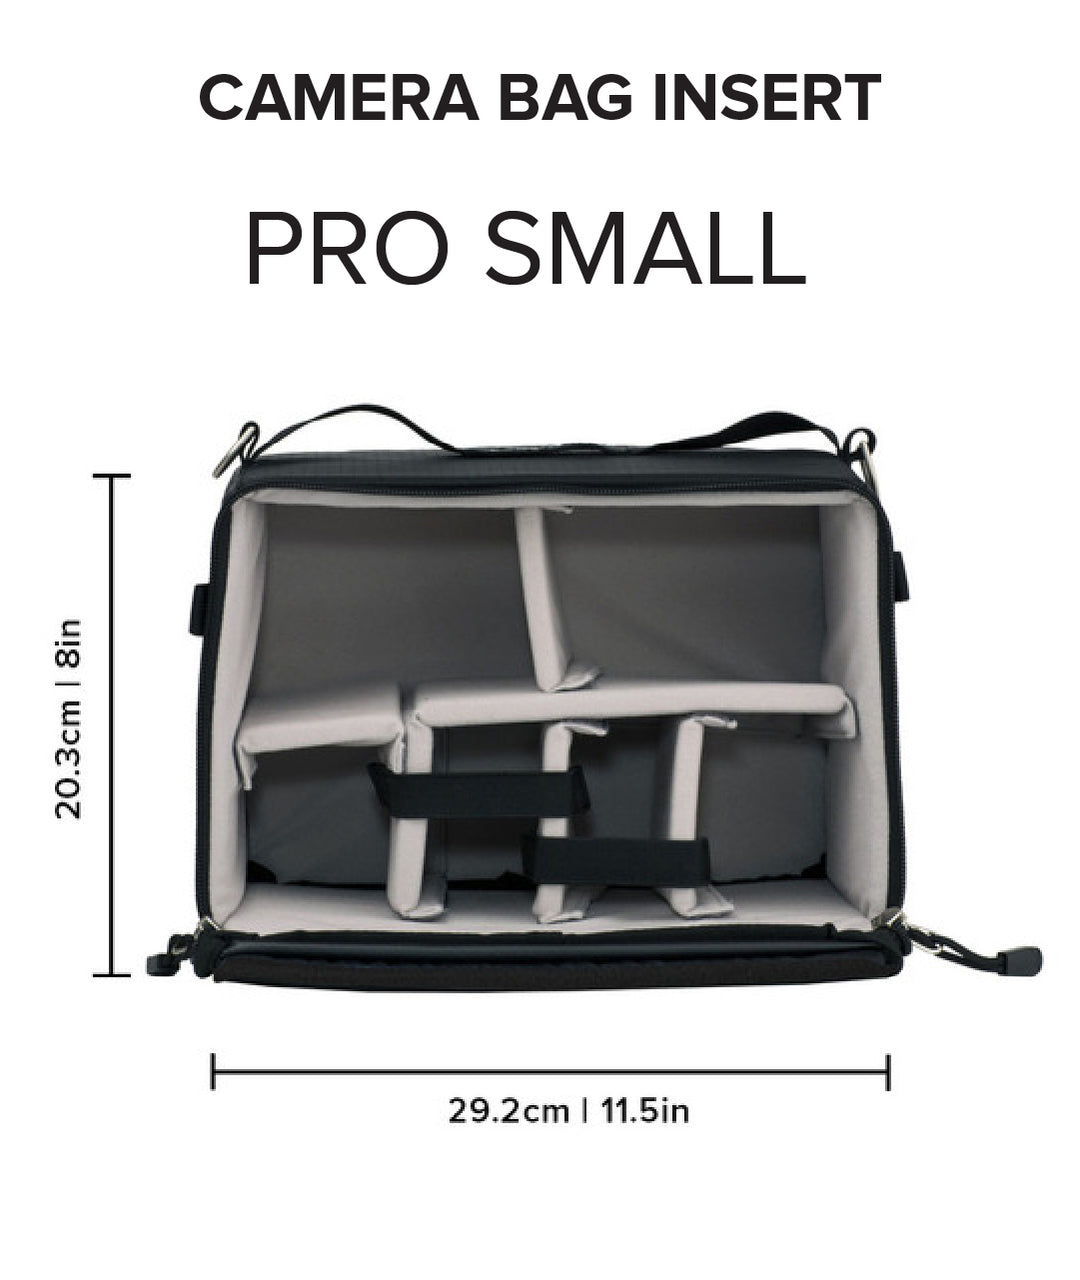 F-Stop ICU (Internal Camera Unit) - Pro Small Camera Bag Insert and Cube Bag